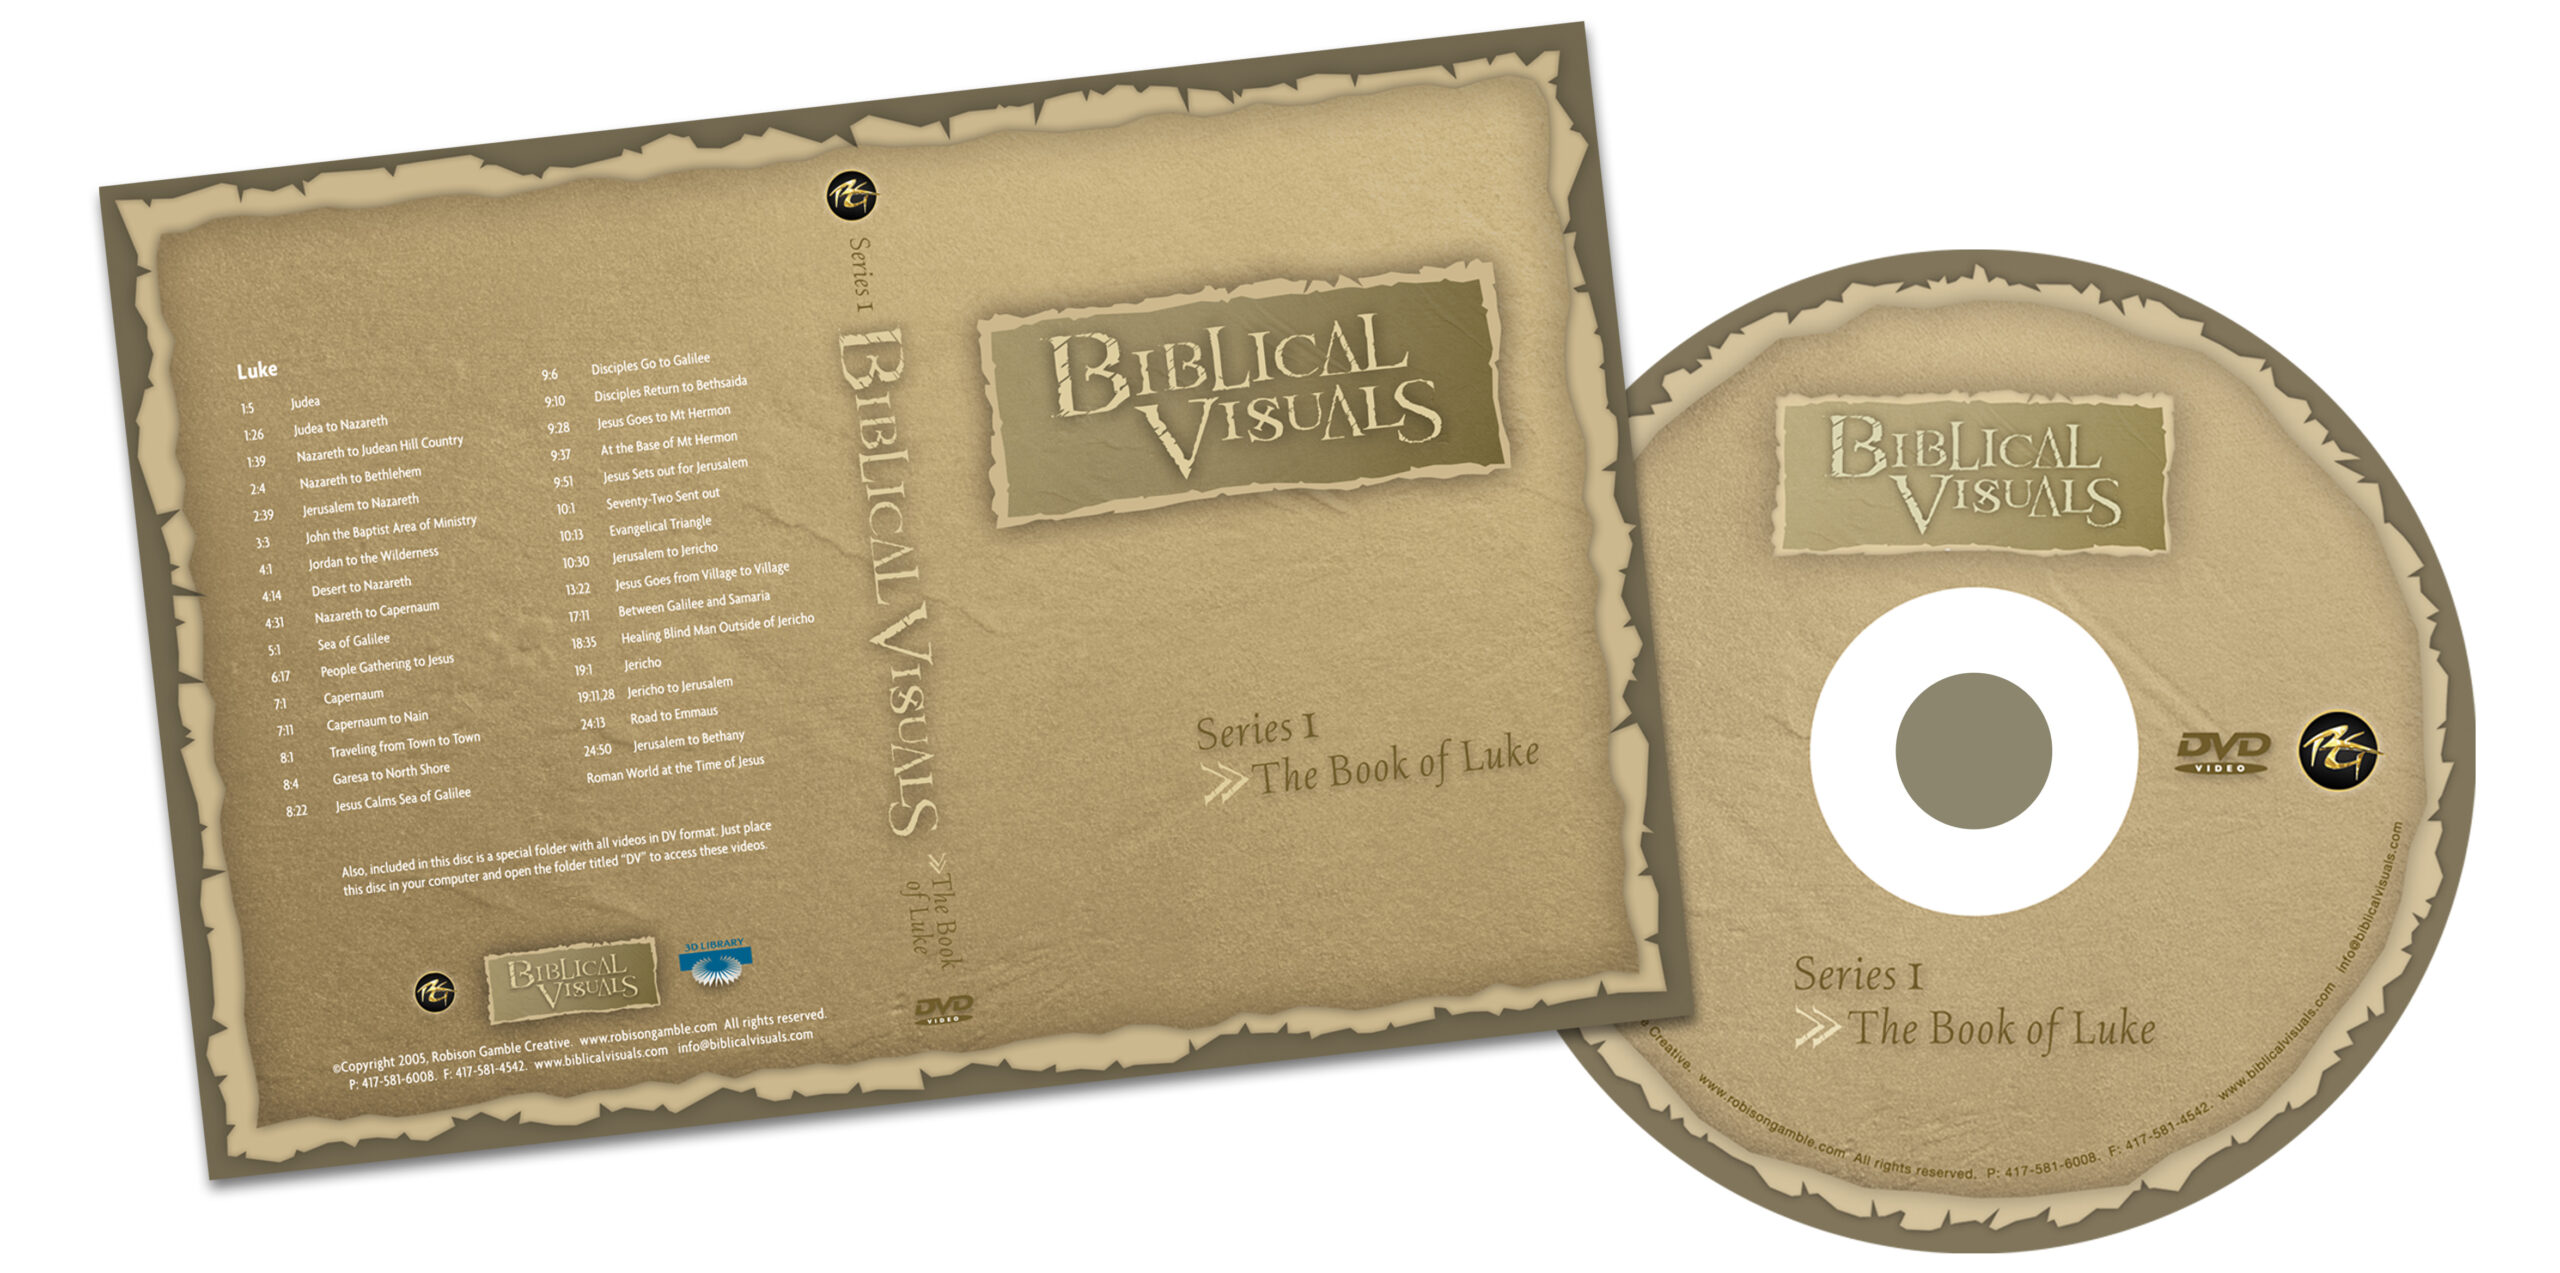 Biblical Visuals DVD packaging